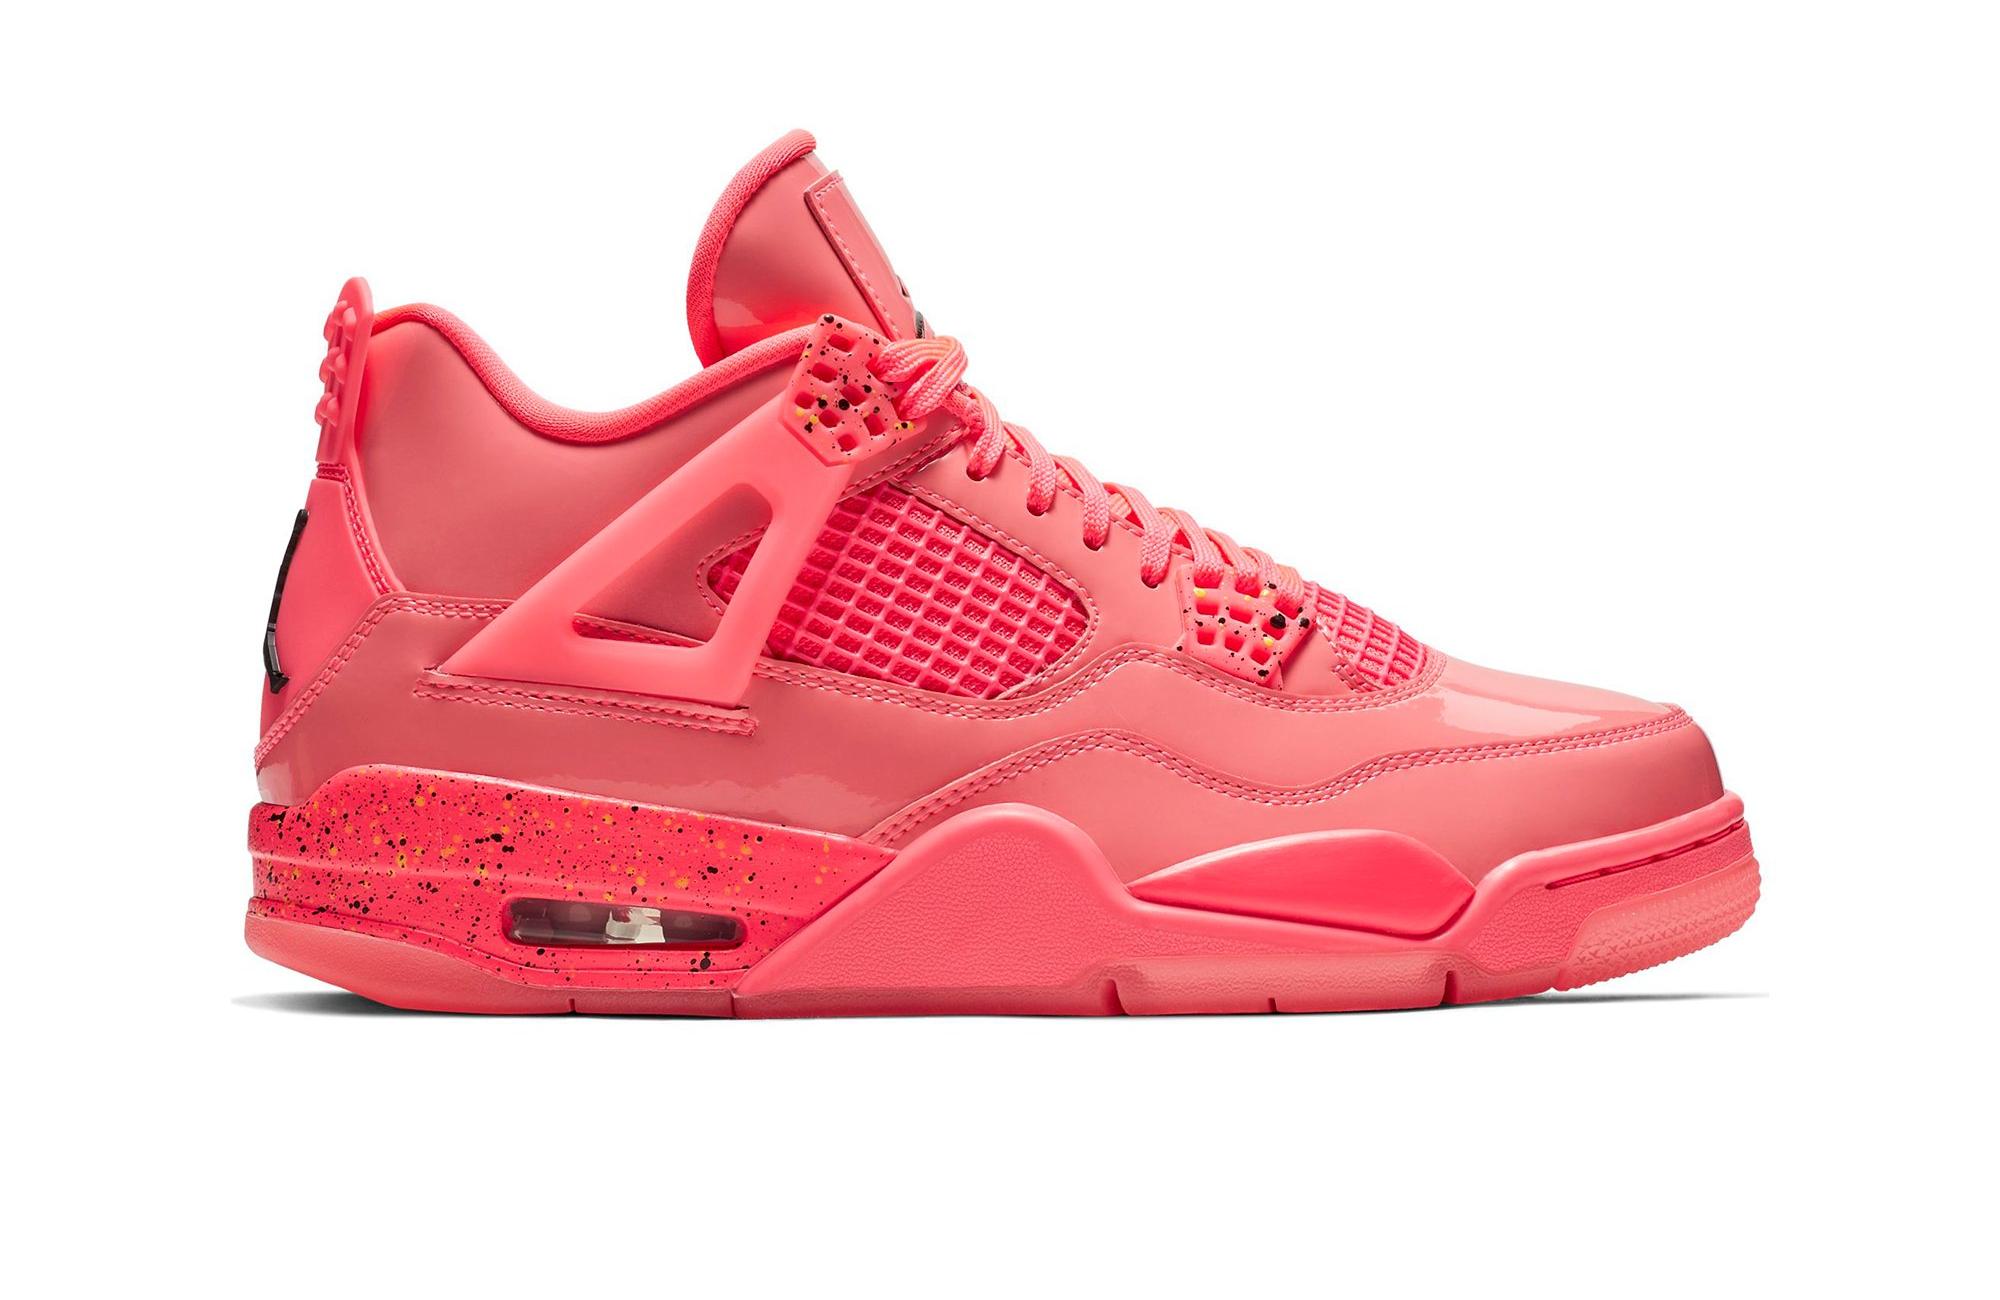 Sneakers Release – Jordan Retro 4 “Hot Punch” Women's Shoes